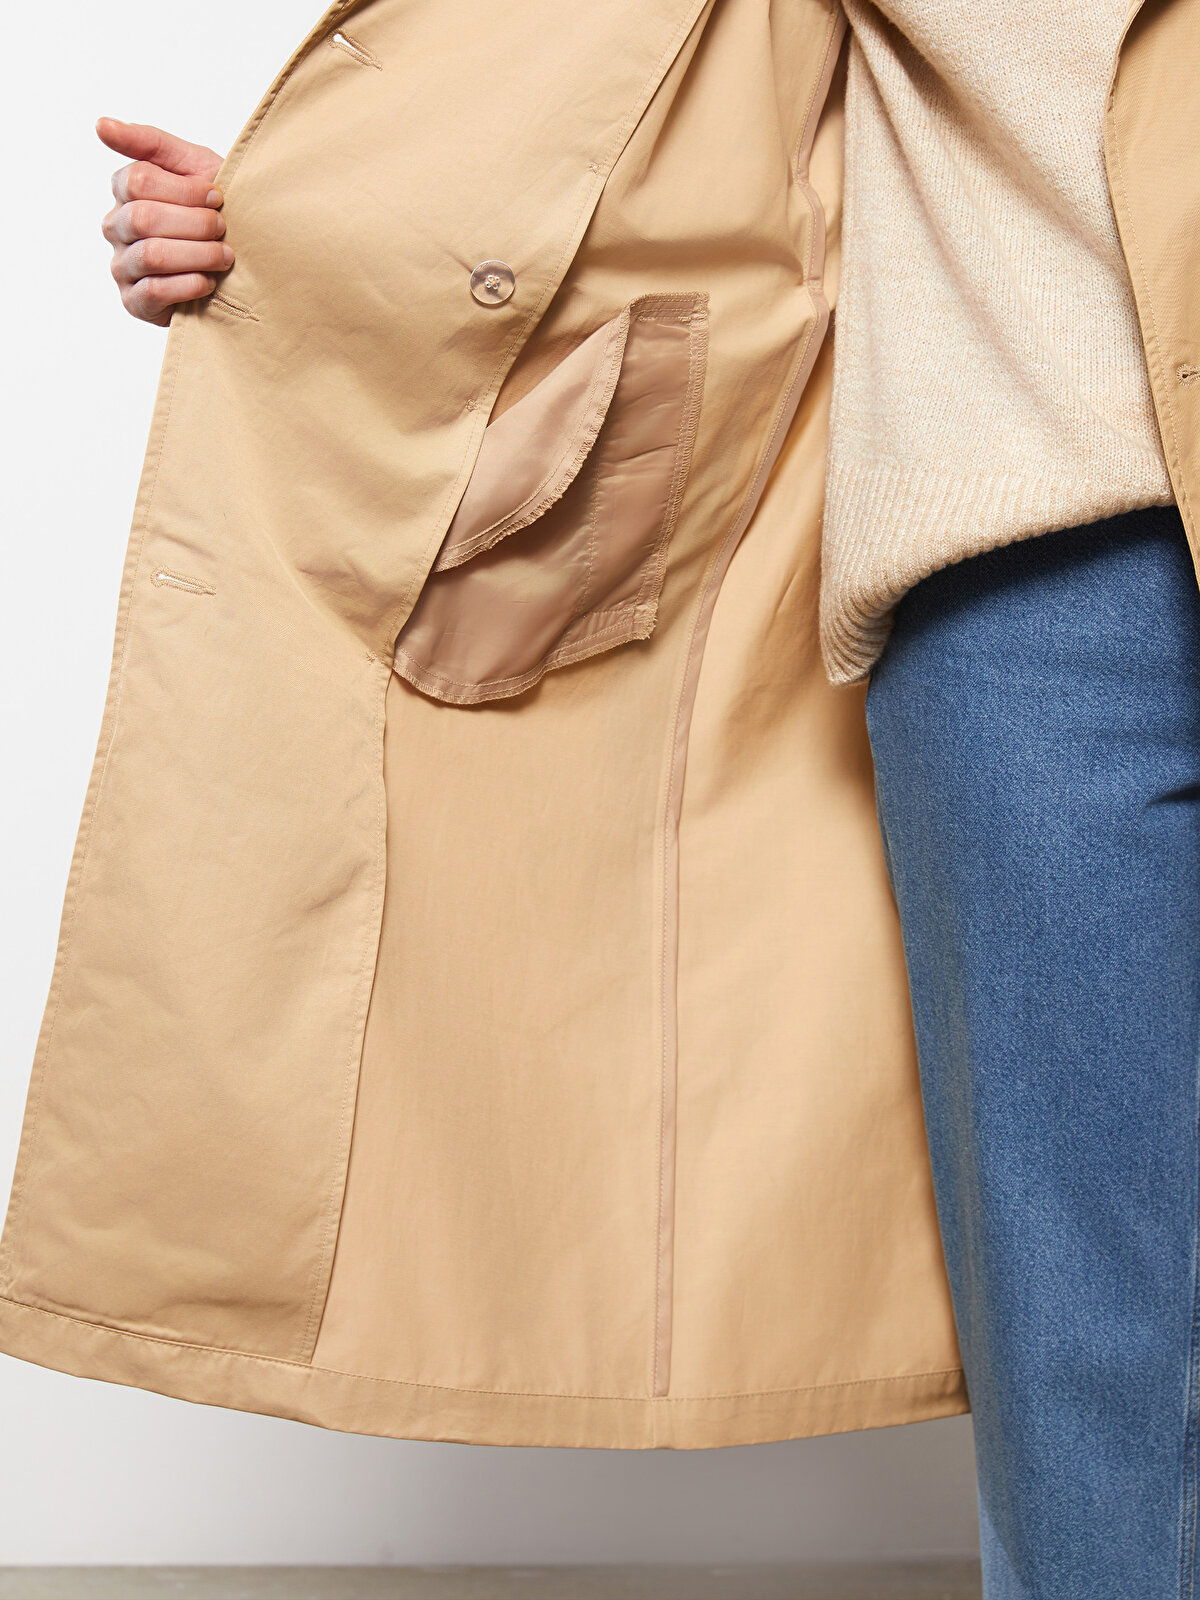 Jacket Collar Regular Long Sleeve Women's Trench Coat -S30301Z8 